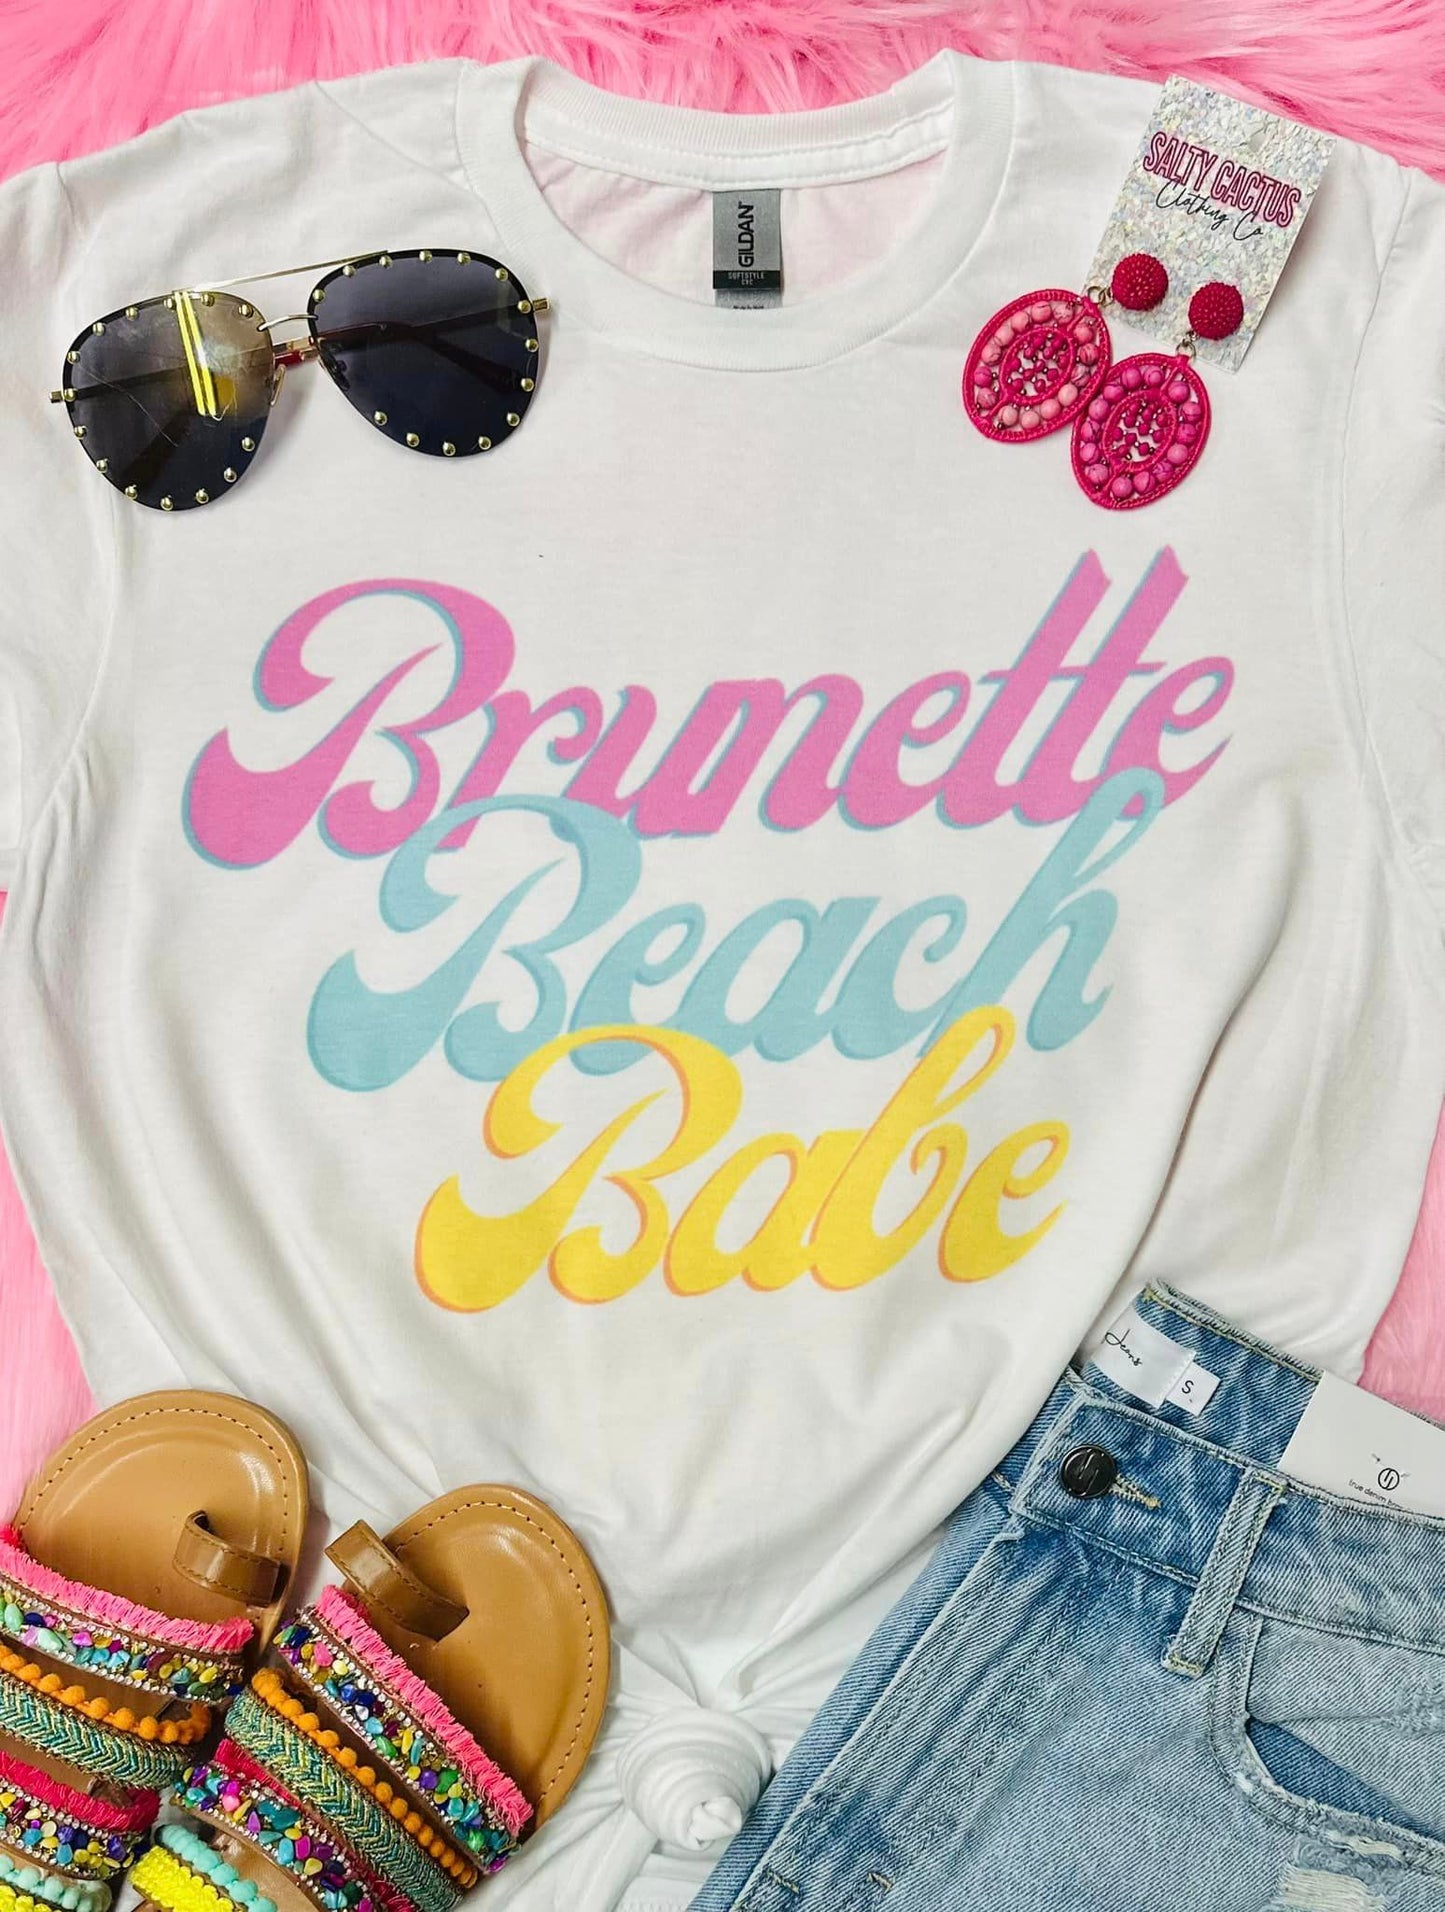 Brunette Beach Babe White Tee